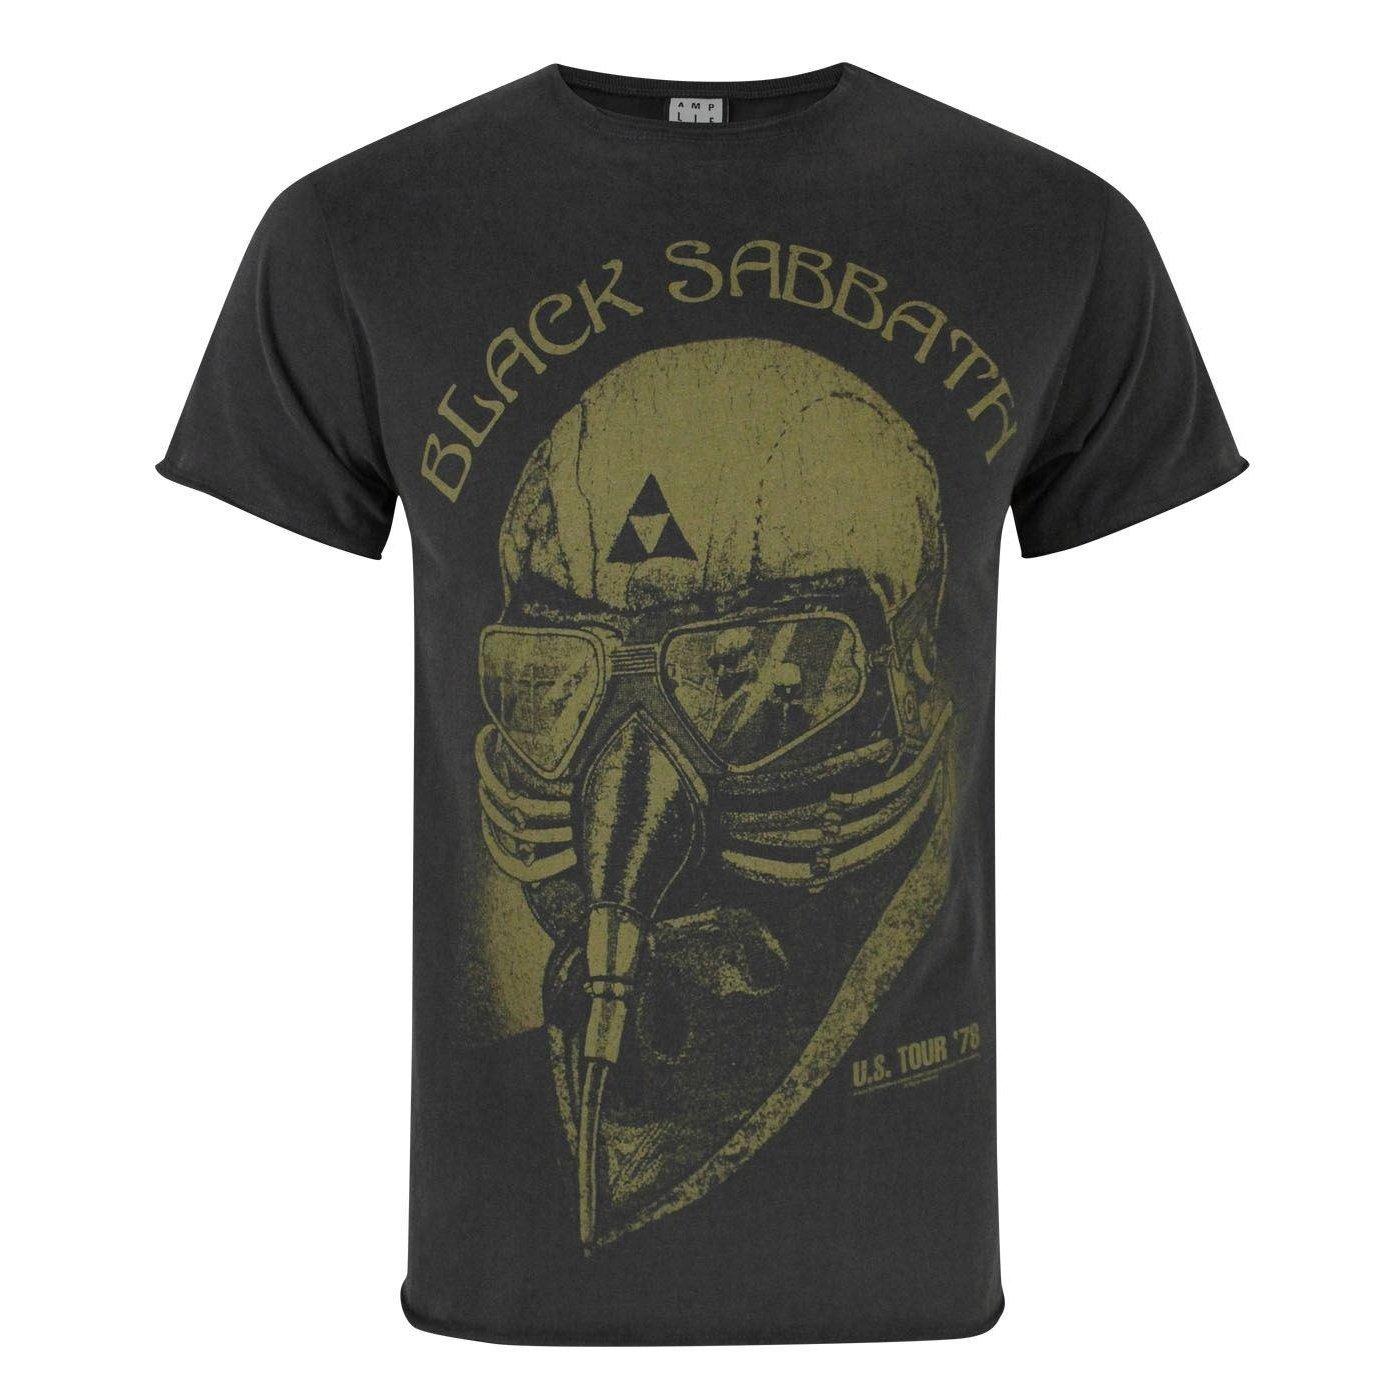 Offizielles Black Sabbath 1978 Us Tour Tshirt Herren Charcoal Black S von Amplified